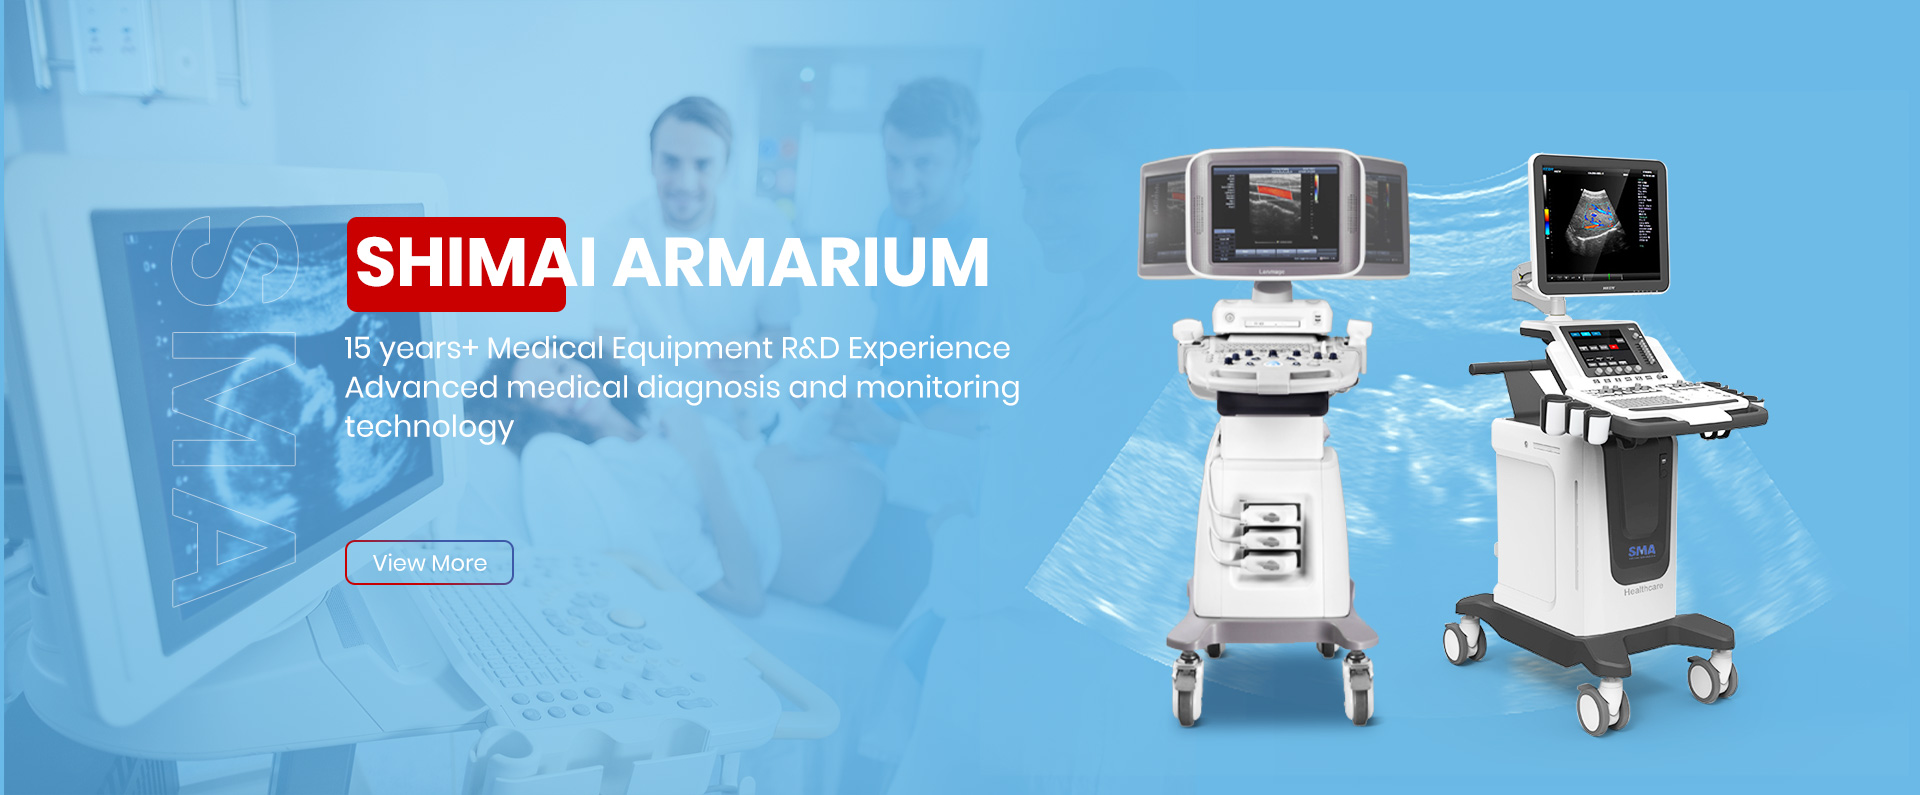 Patient Monitor, Syringe Pump, Ultrasound Machine - Shimai